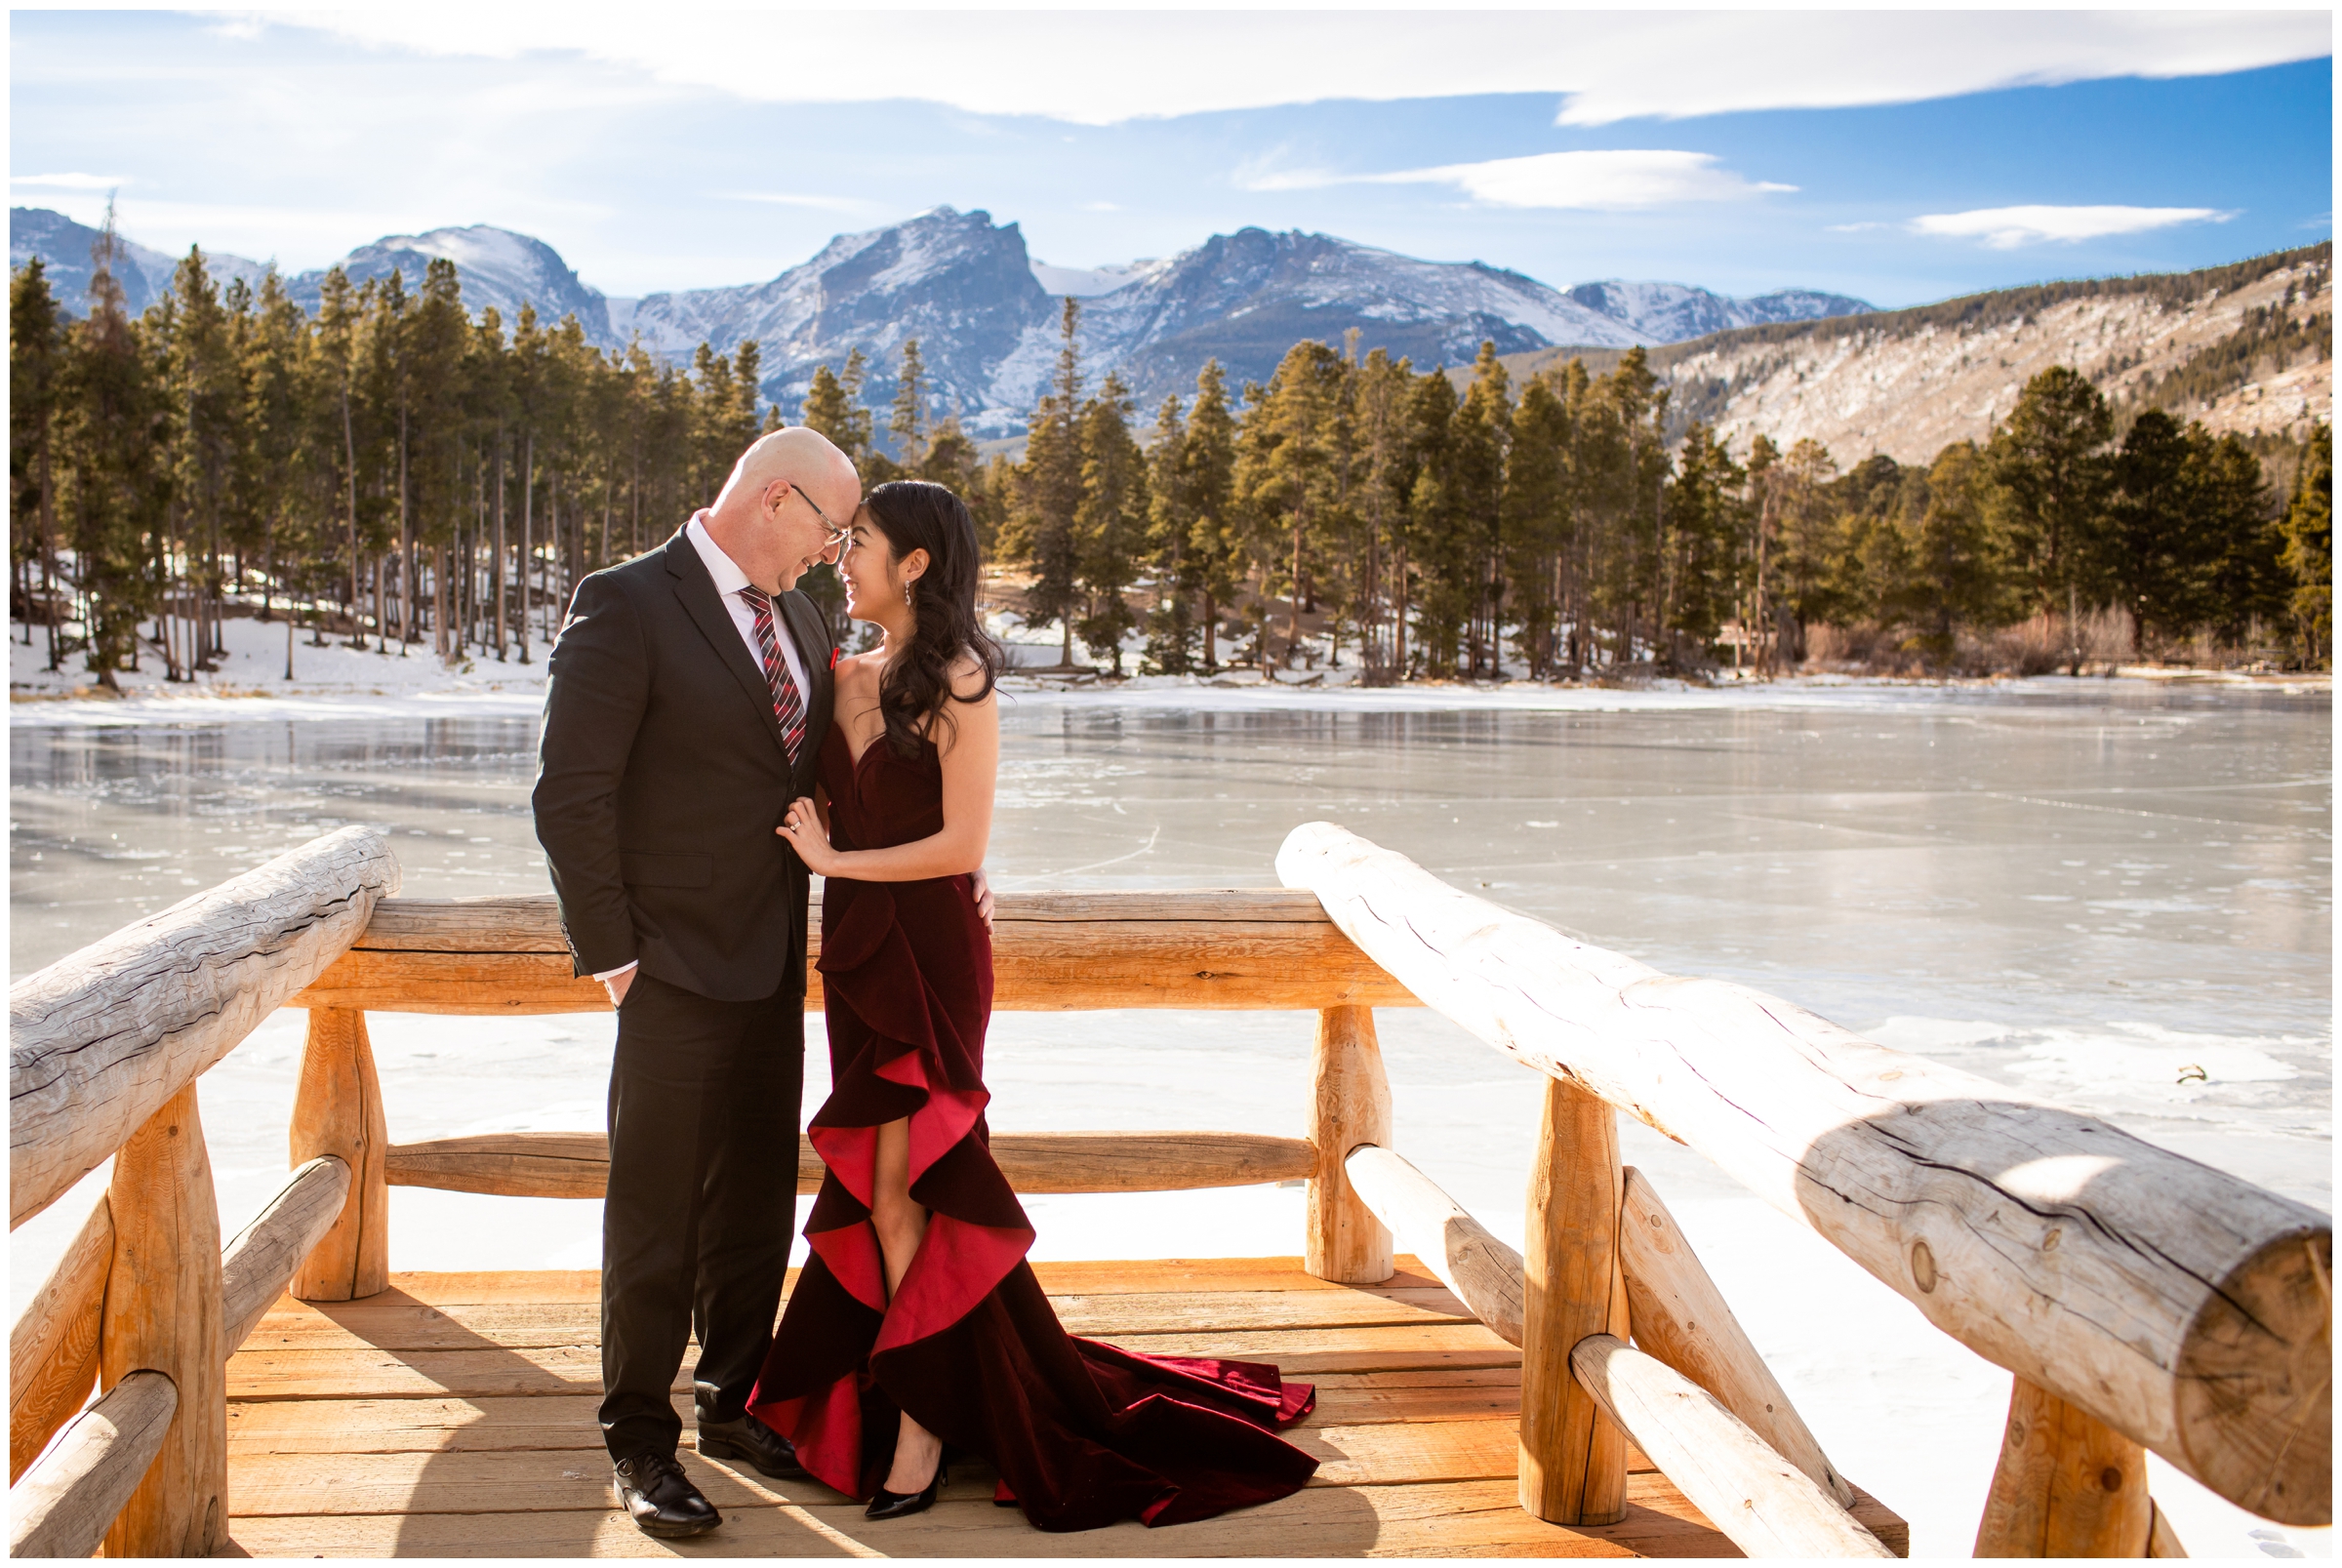 RMNP Winter couples photos at Sprague Lake by Estes Park elopement wedding photographer Plum Pretty Photography